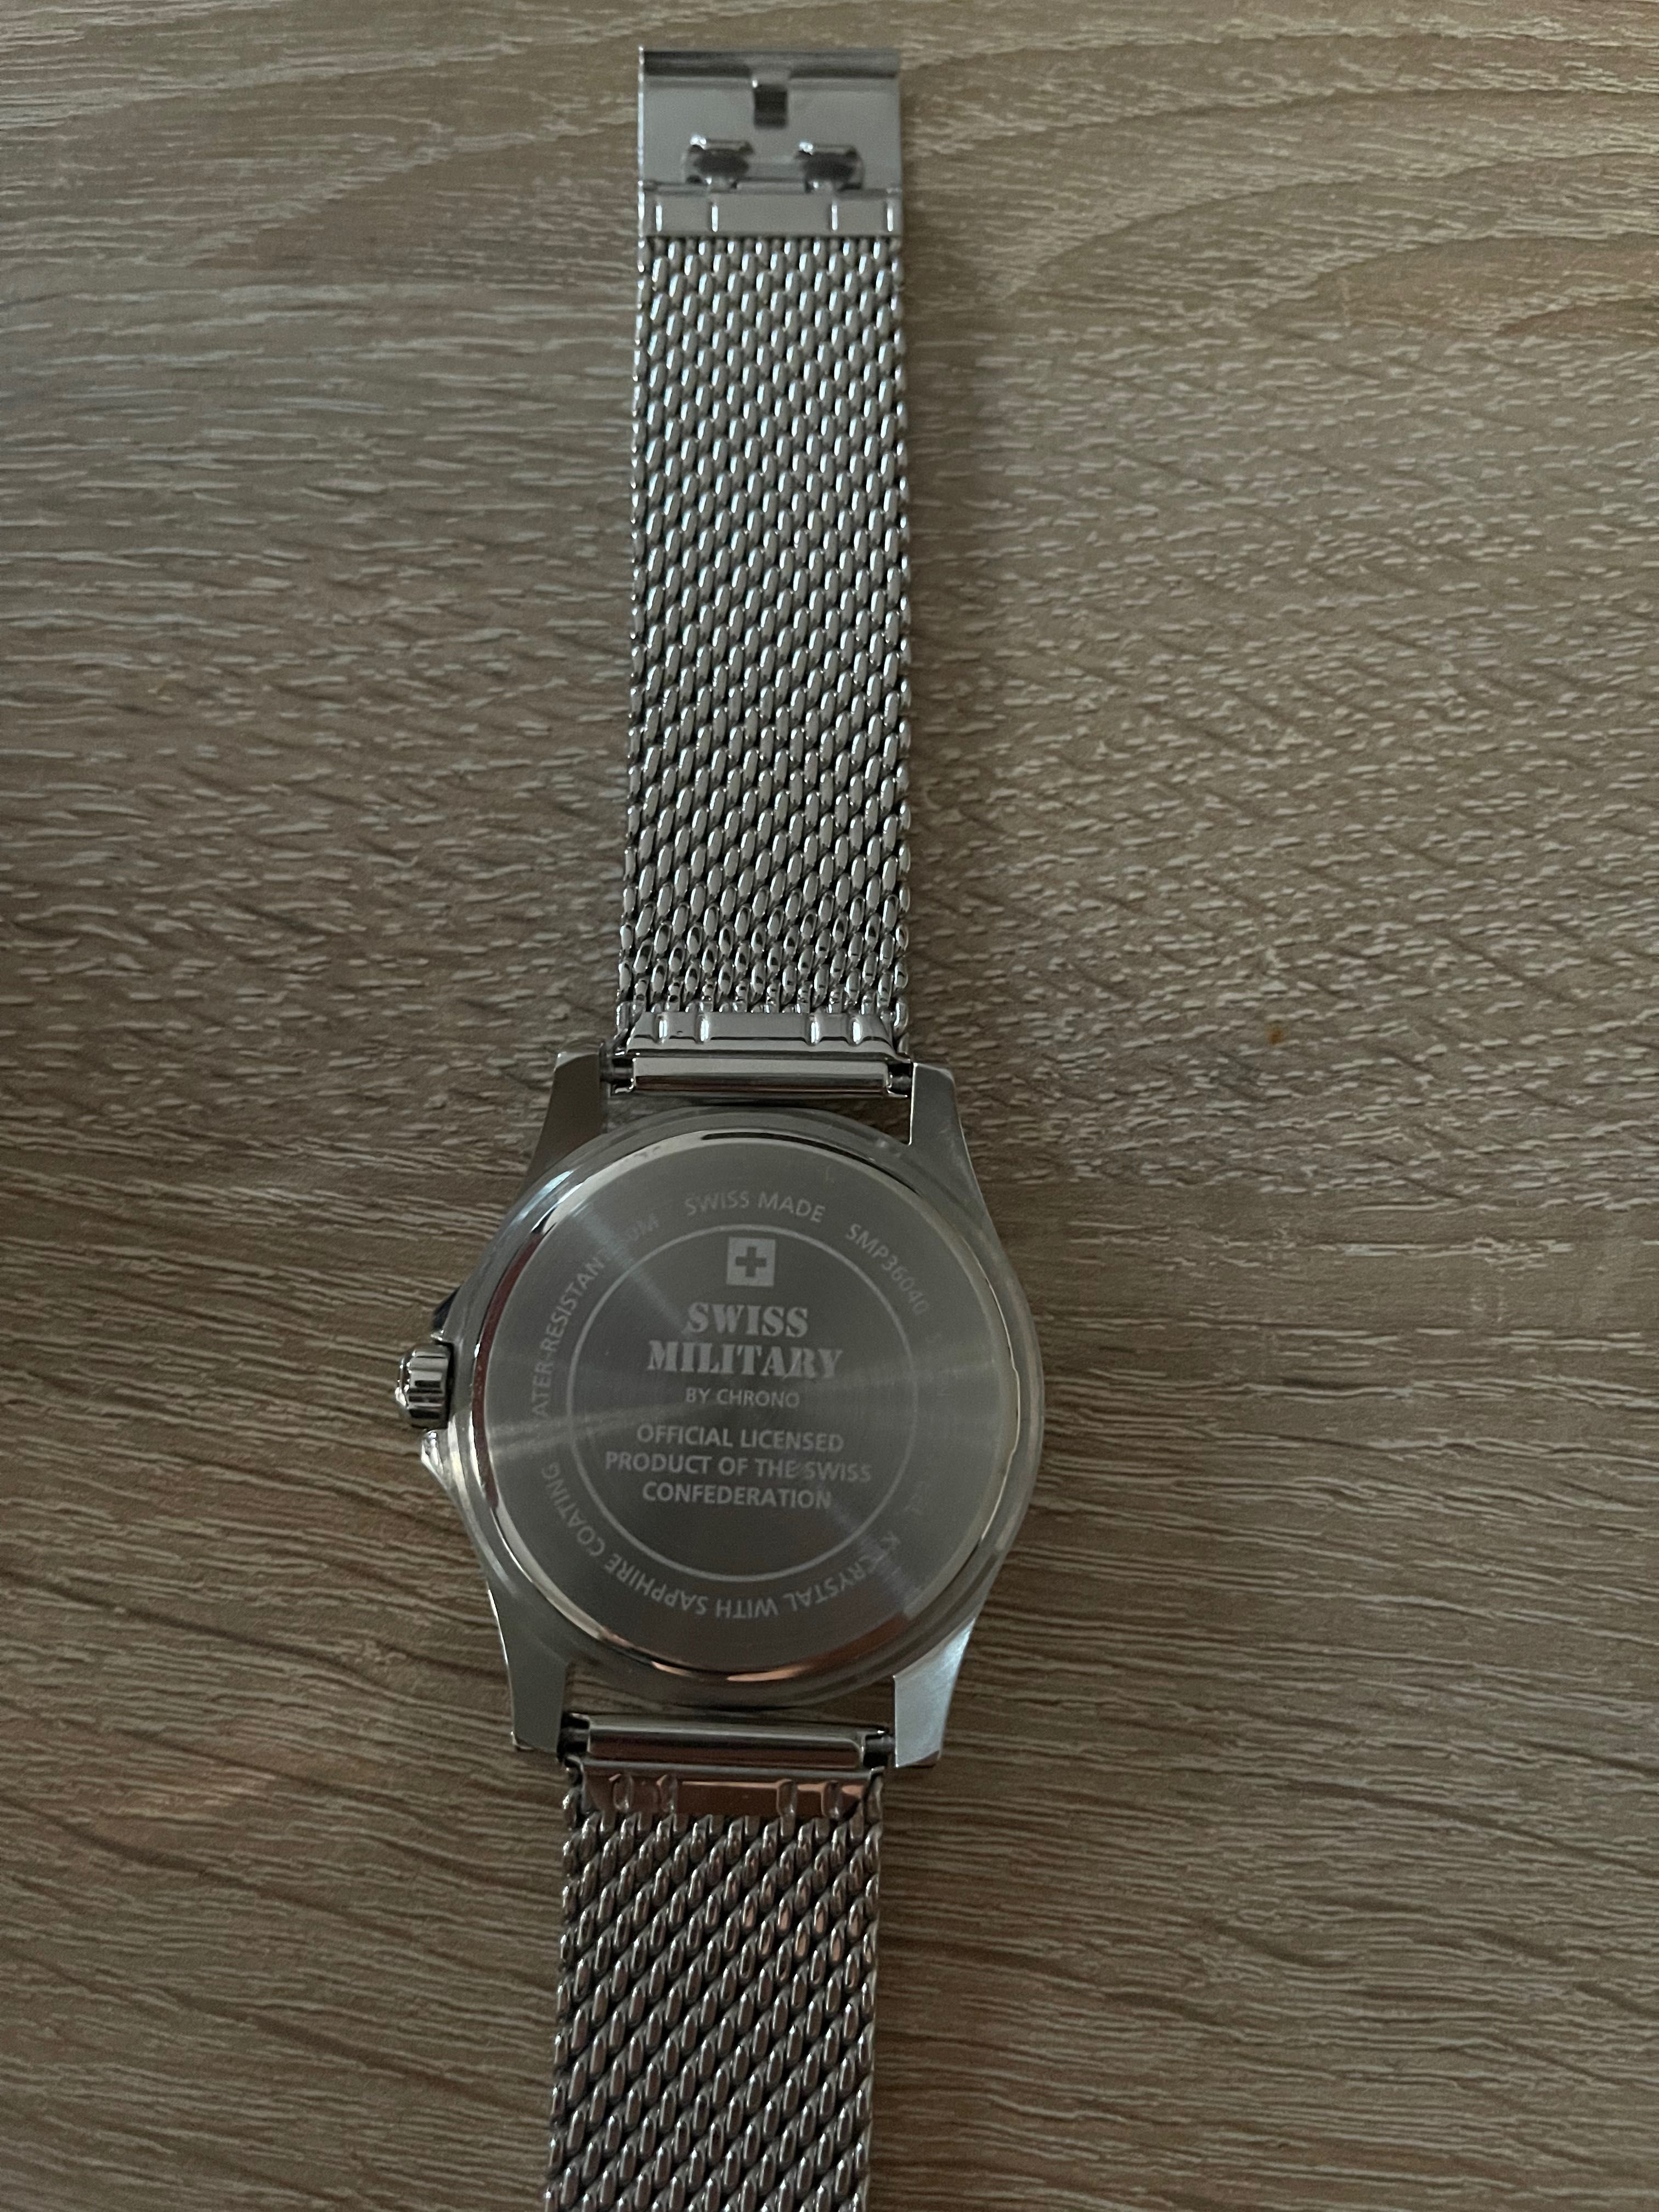 Мъжки часовник Swiss Military By Chrono SMP36040.09, 42mm, 5ATM